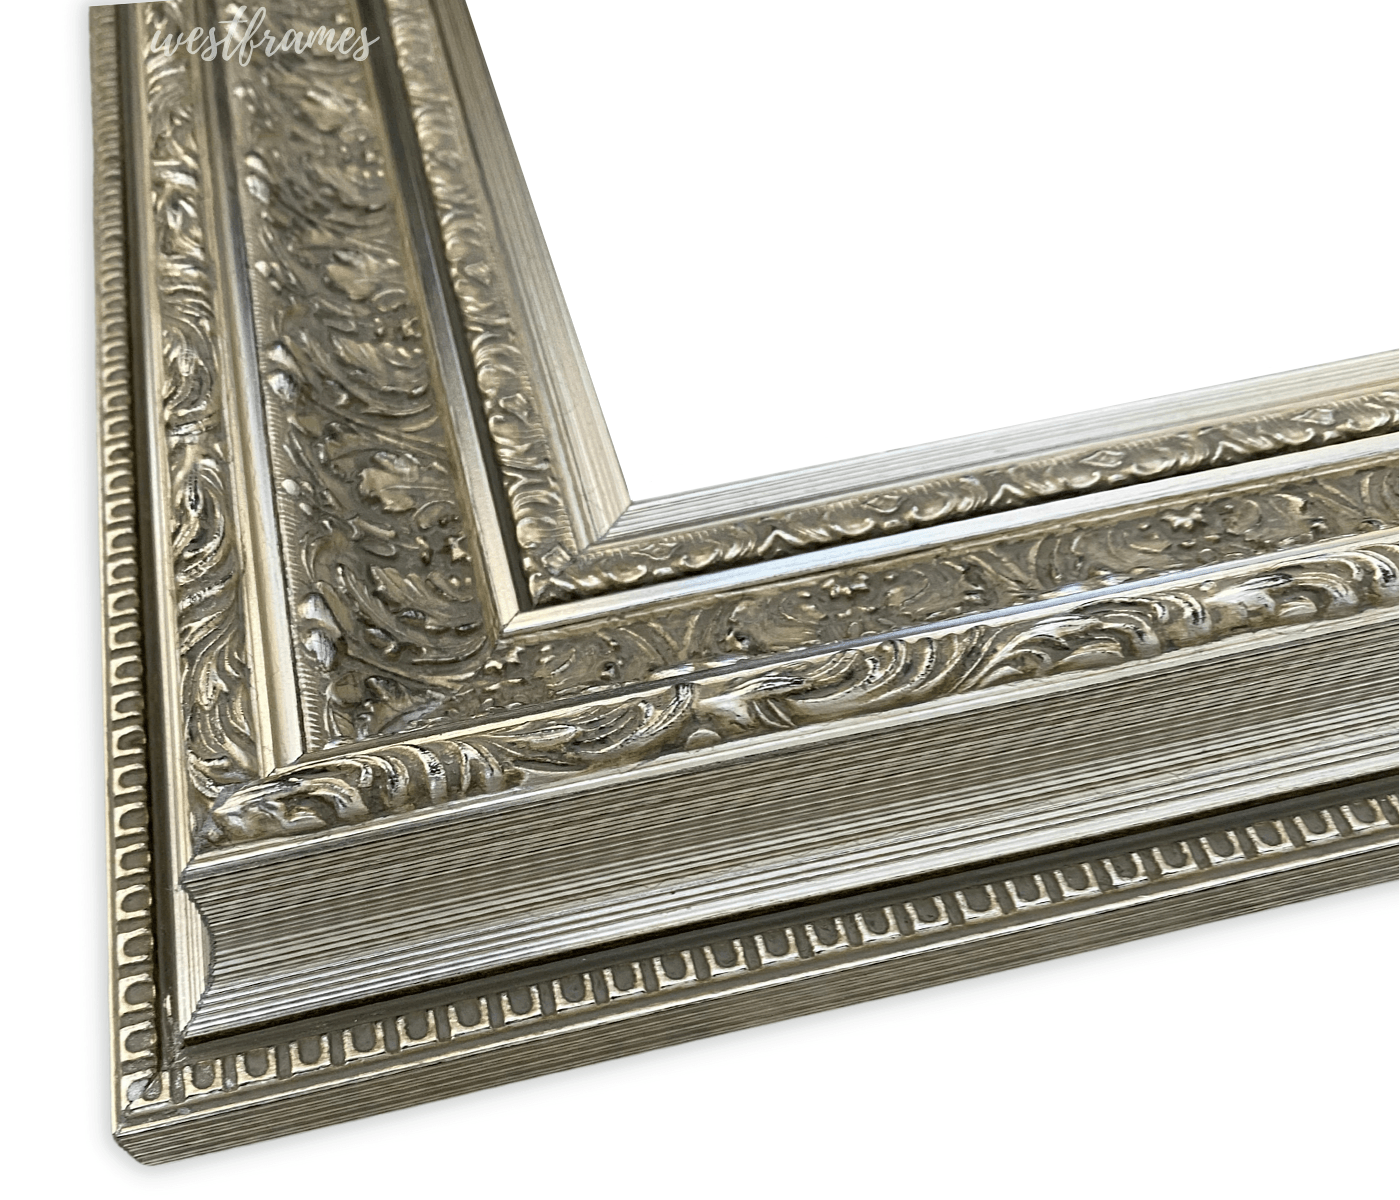 Elegance French Ornate Embossed Wood Picture Frame Antique Silver Gold 3.75" Wide - West Frames